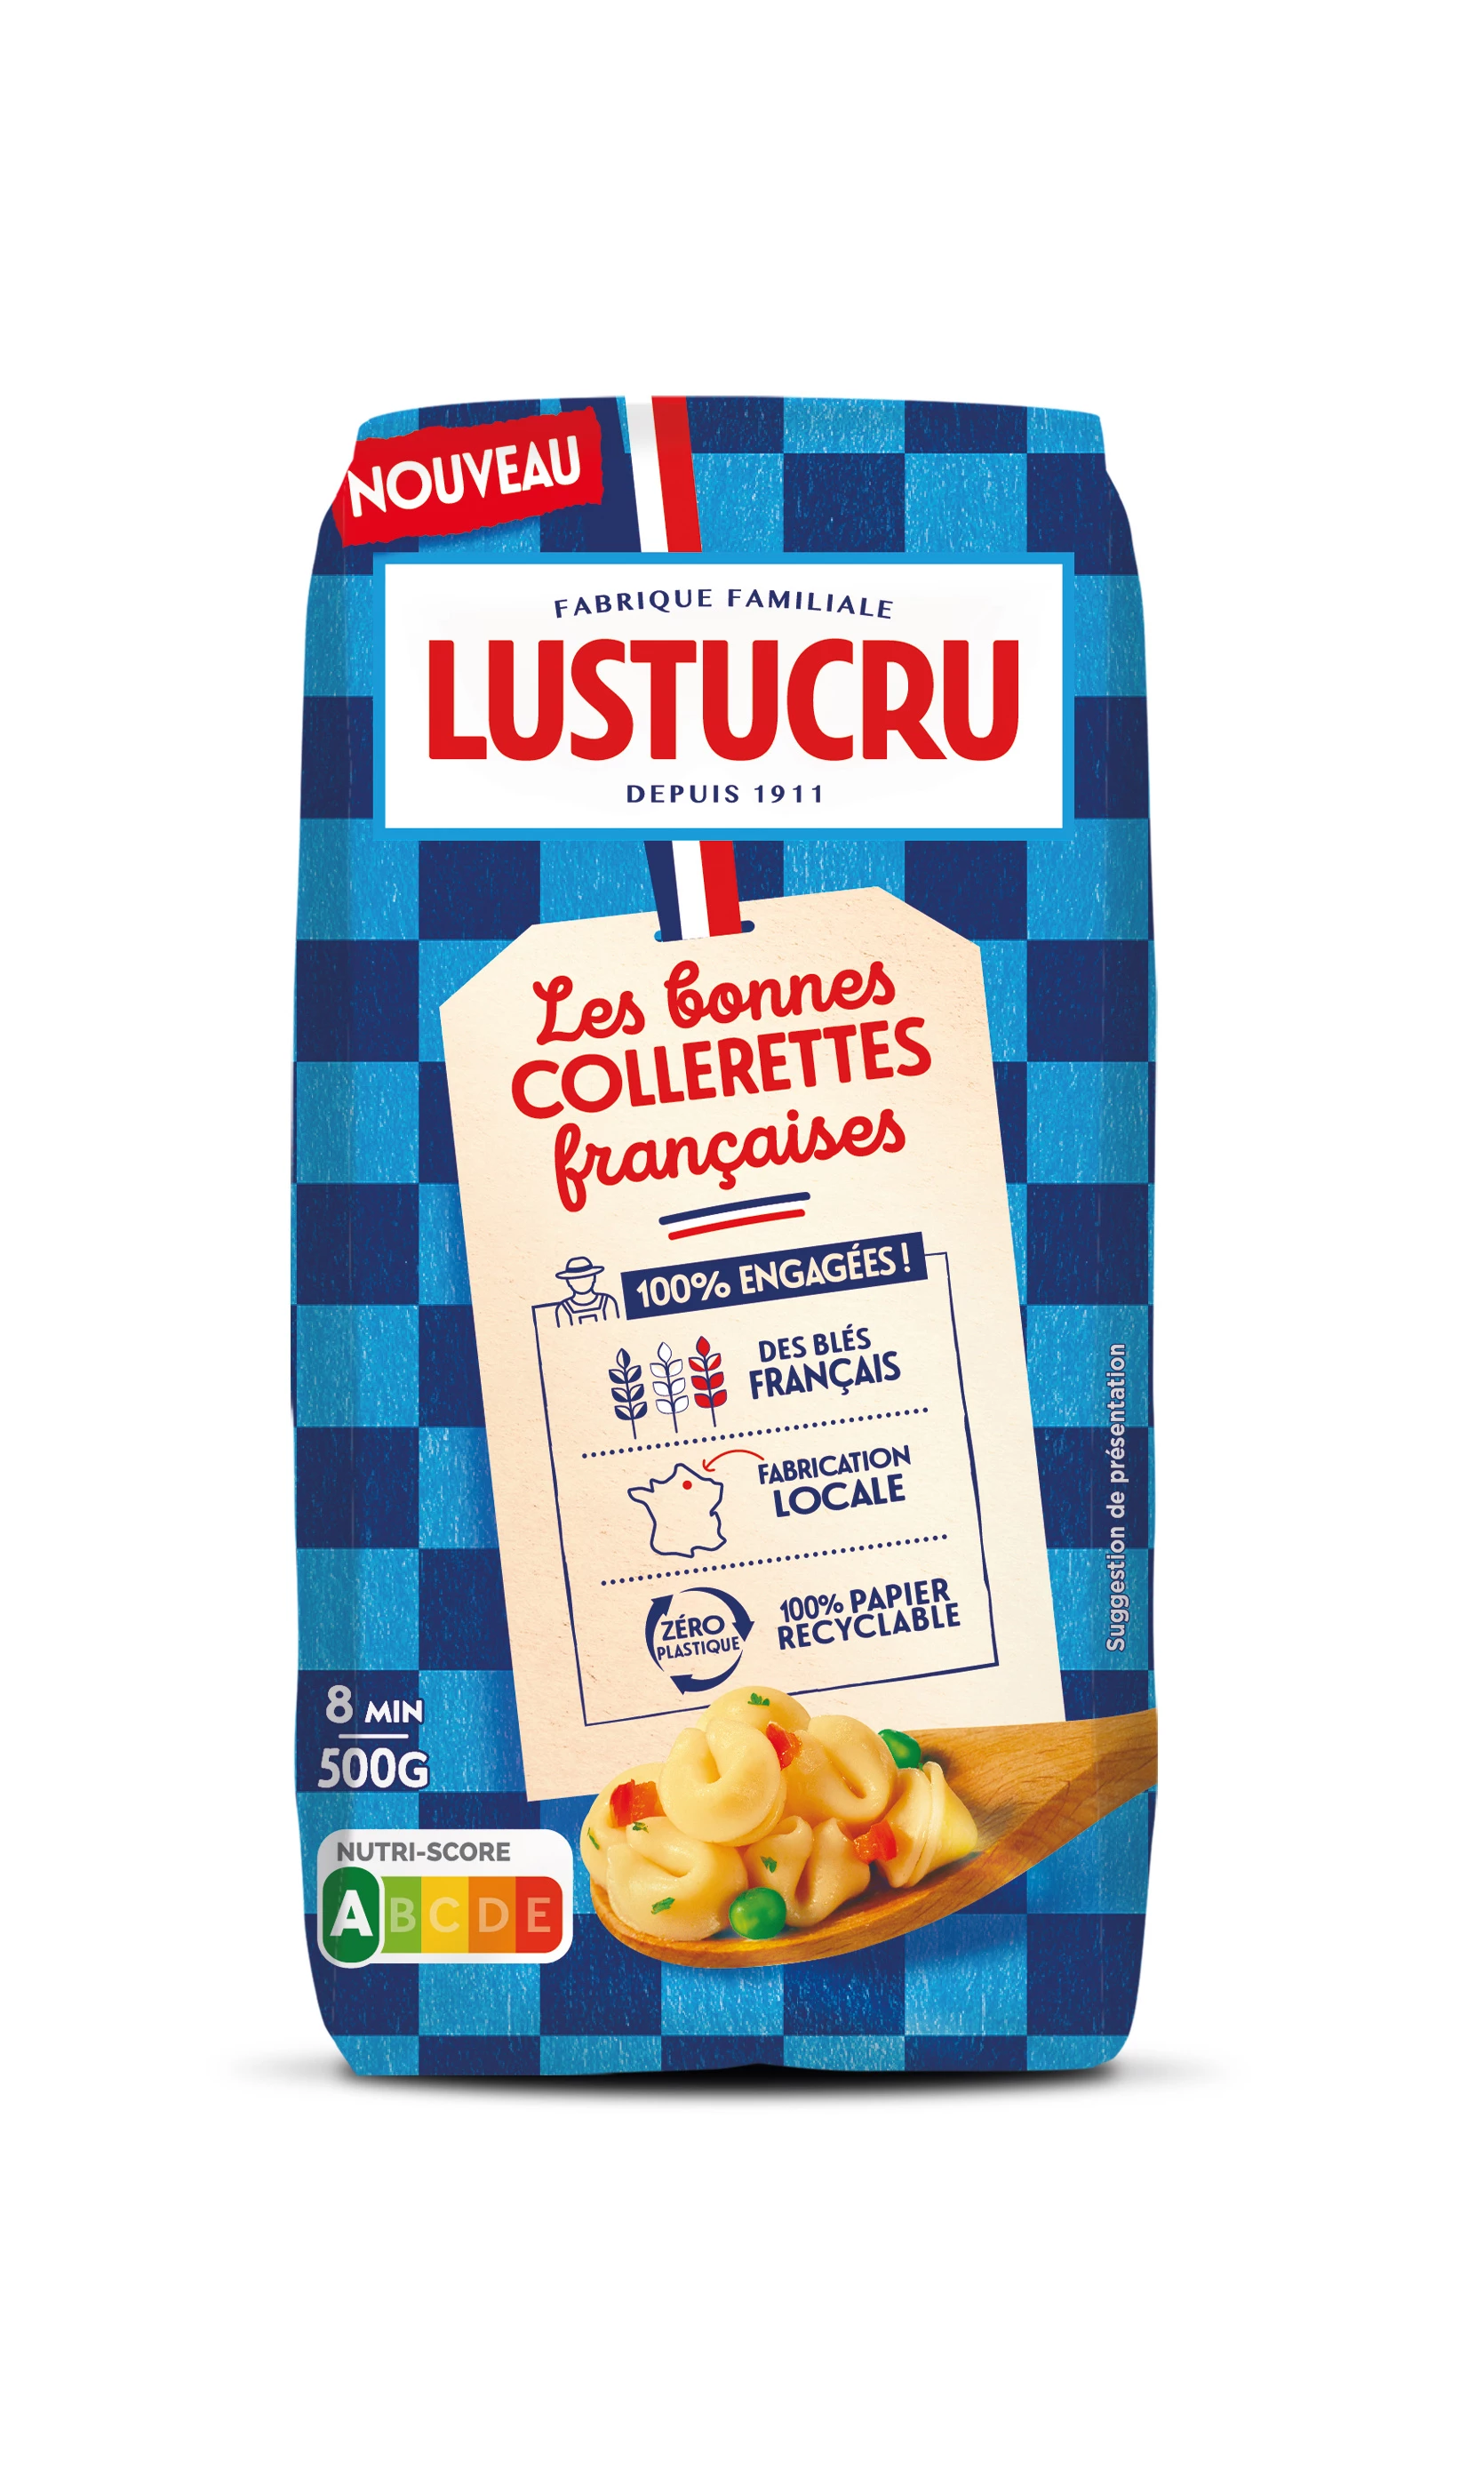 Pasta de Col lerettes, 500g - LUSTUCRU